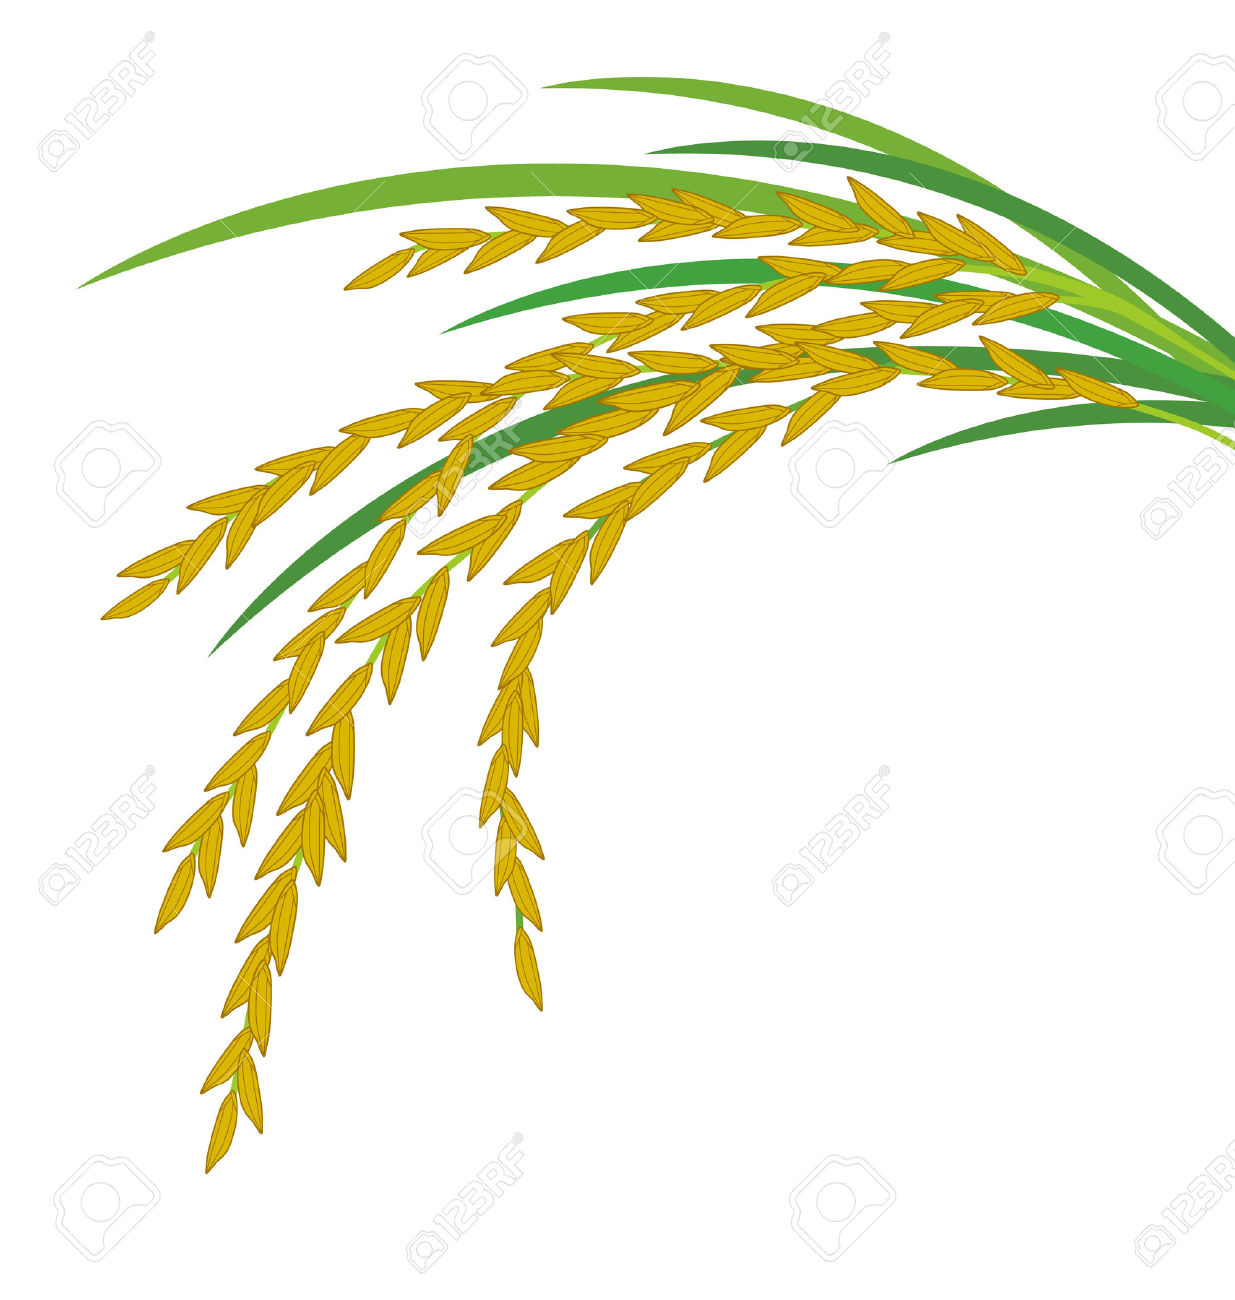 rice plant clipart - photo #43